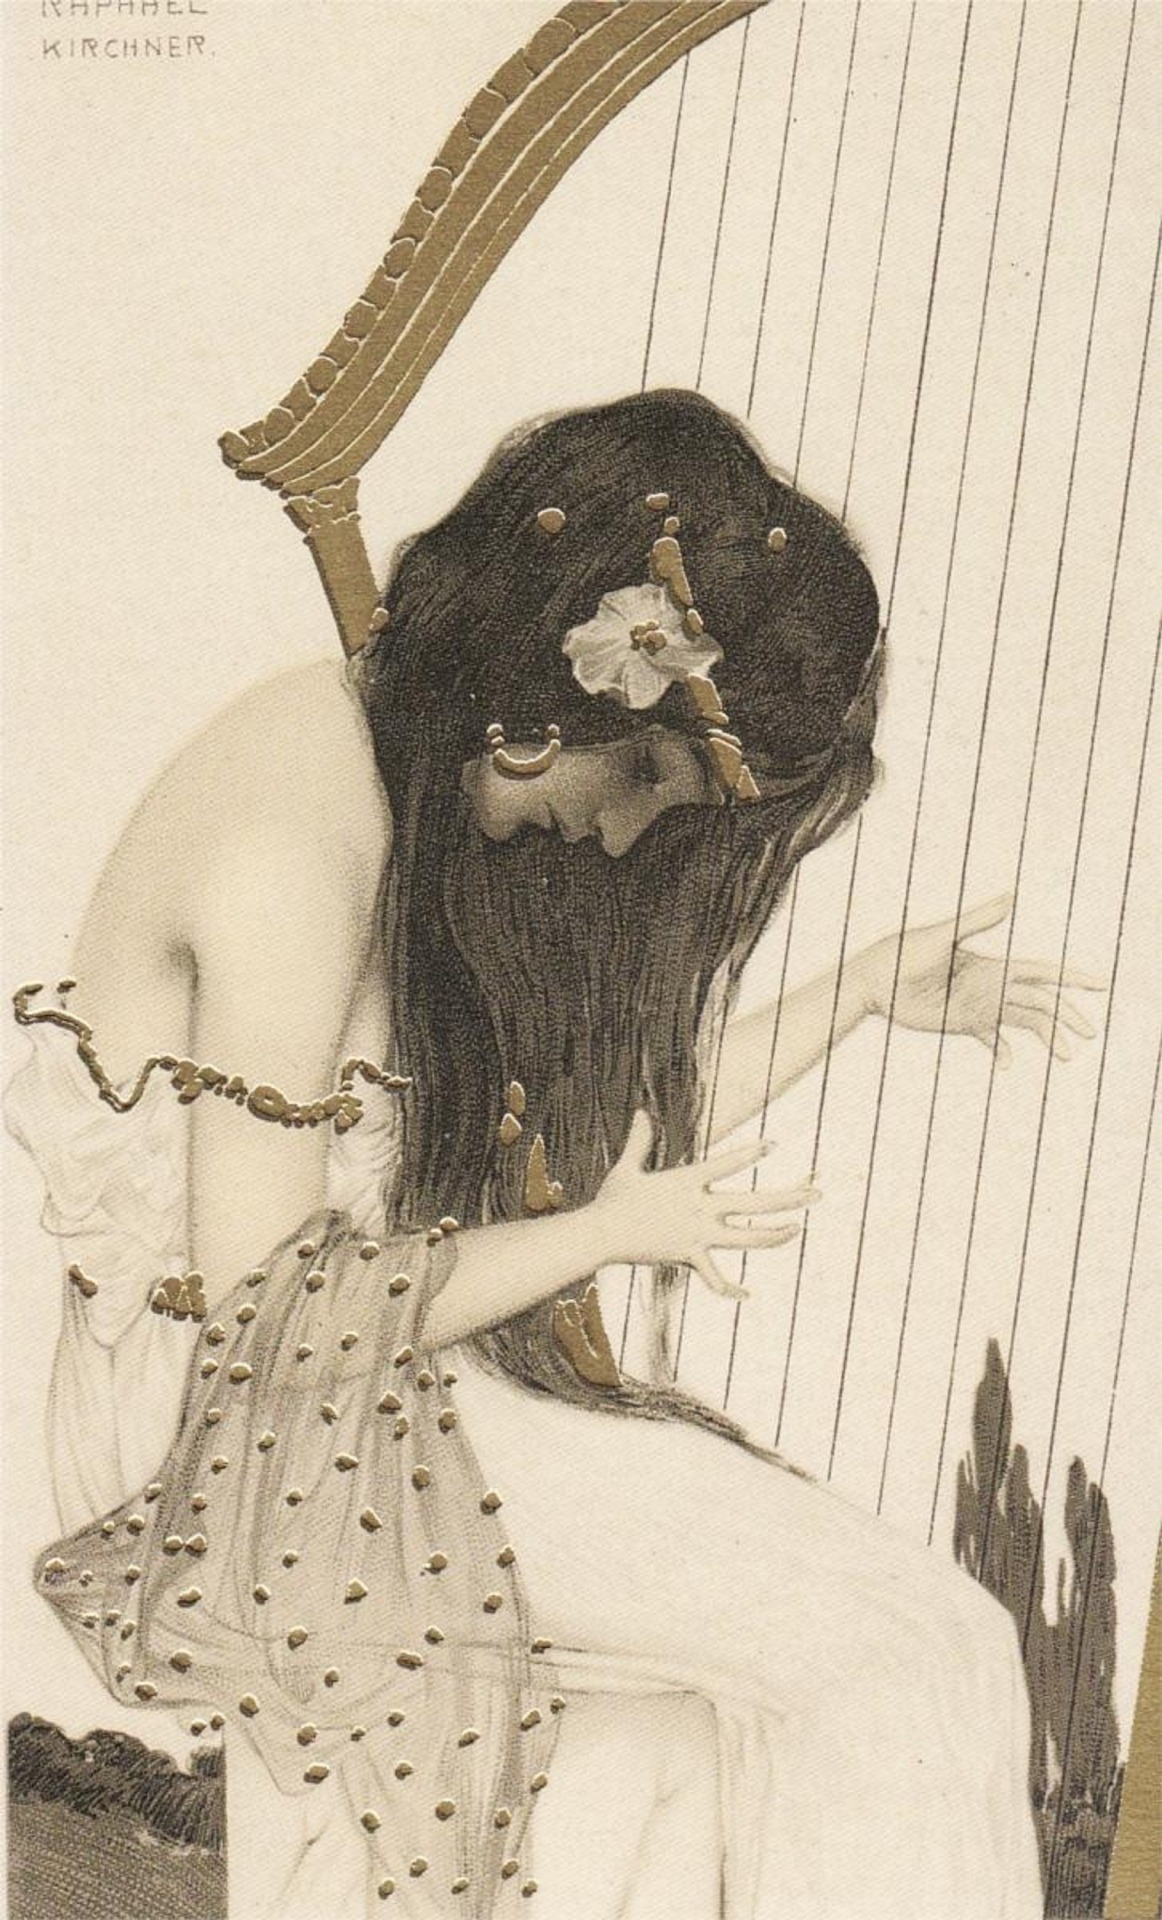 silenceformysoul:
“Raphael Kirchner - Greek Virgins, 1900
”